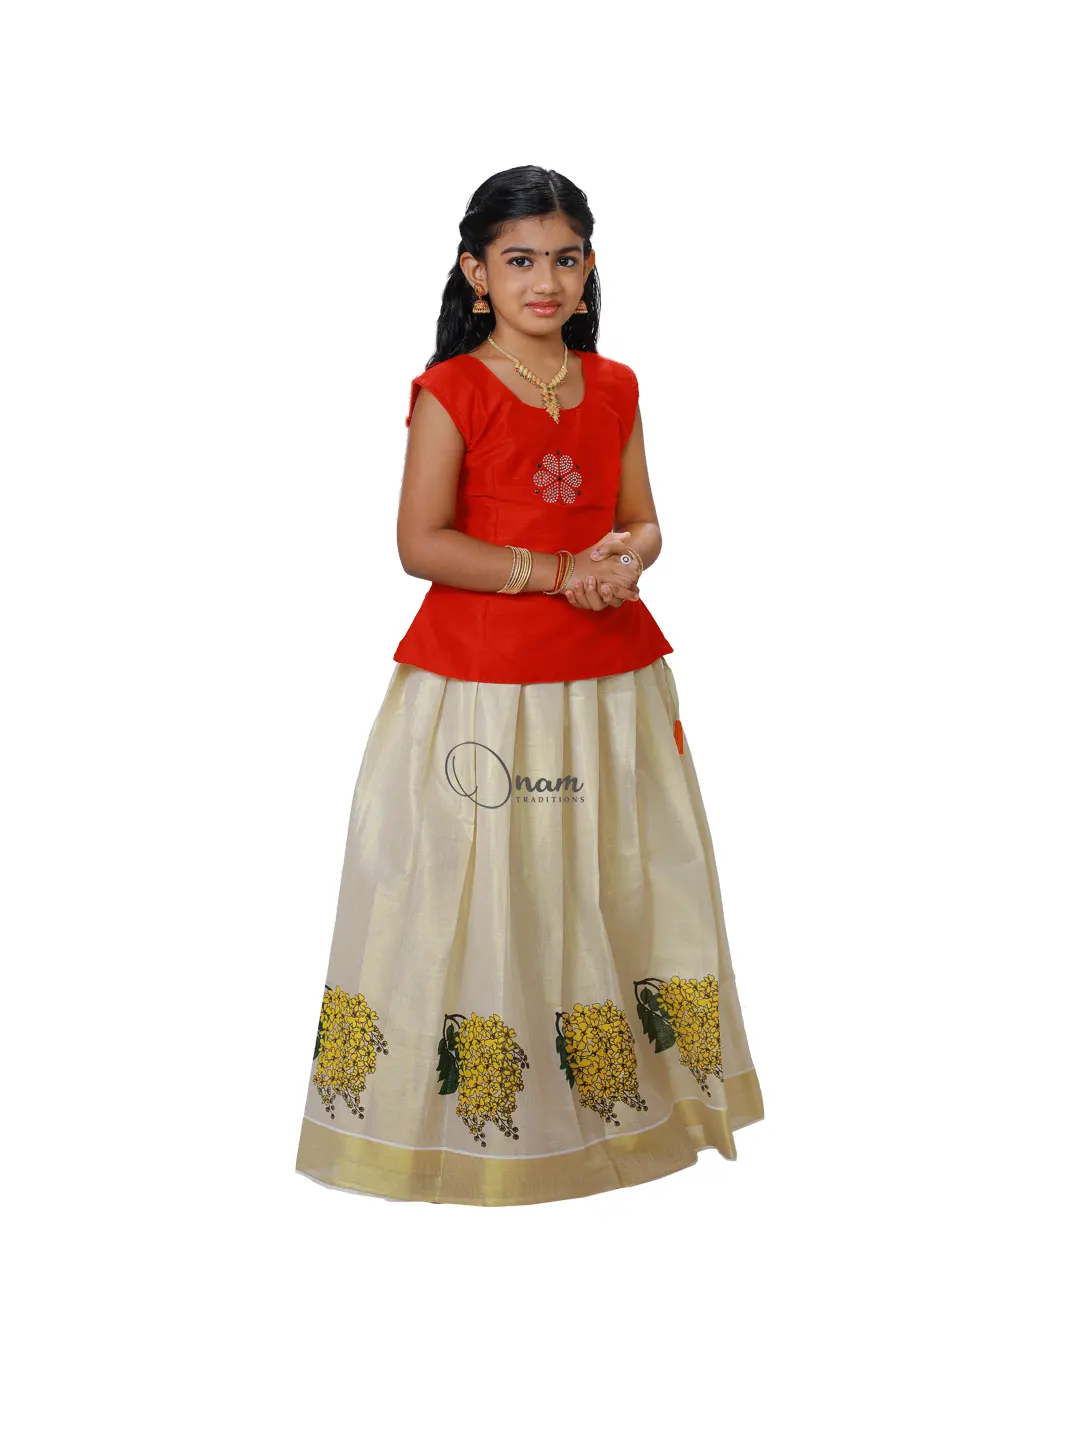 342 Likes, 3 Comments - Ashtamudi wellness (@ashtamudi_wellness) on  Instagram: “Opening shortl… | Long dress design, Kerala engagement dress,  Long skirt top designs